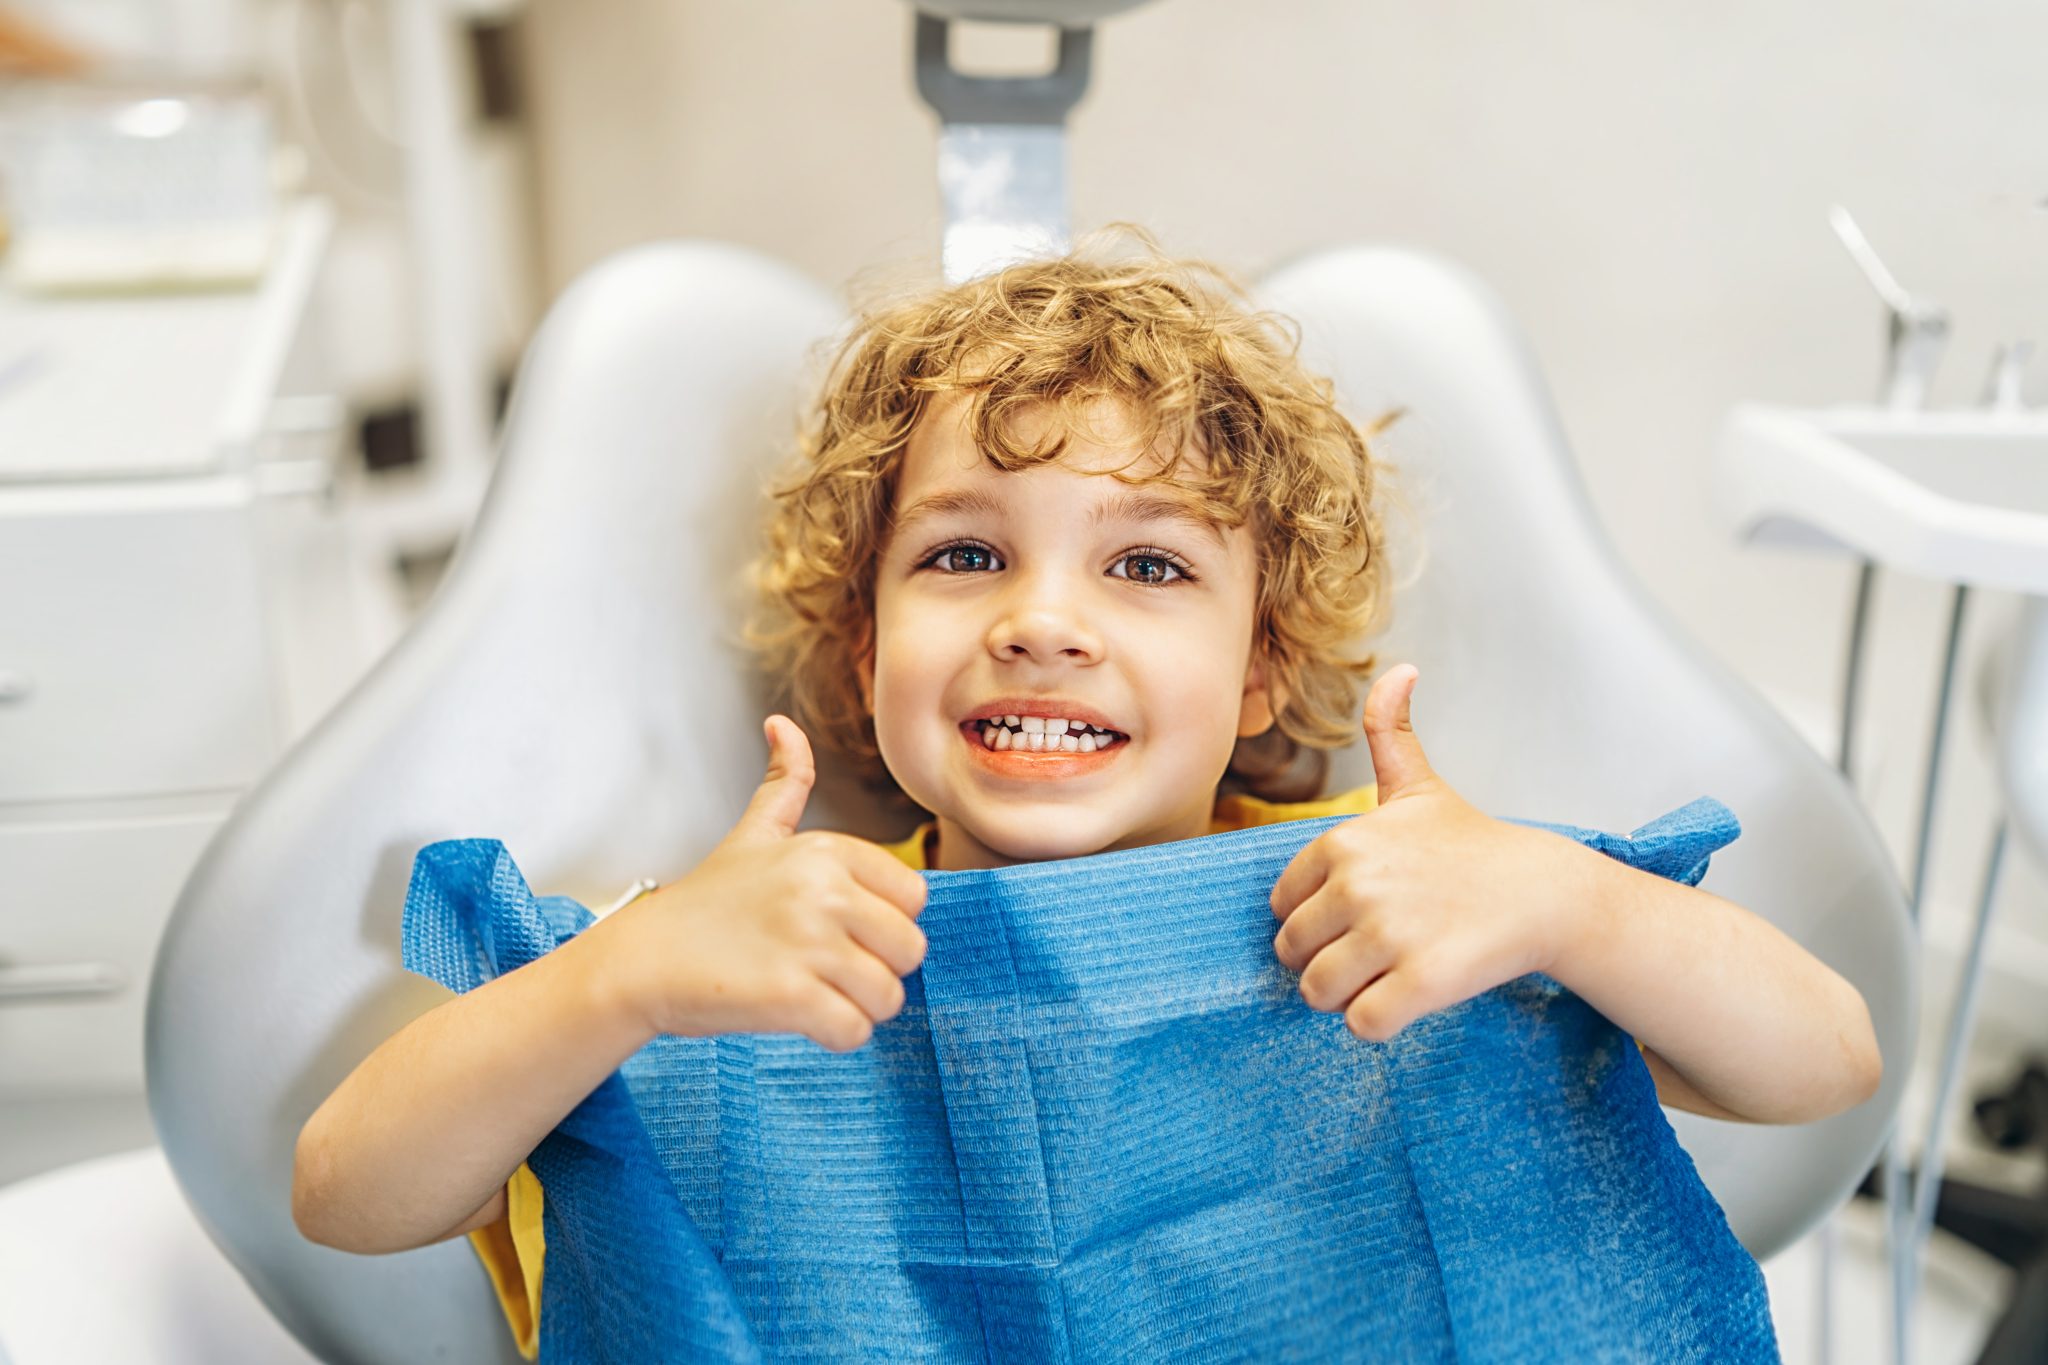 Little Smiles Pediatric Dentistry: Your Trusted Pediatric Dentist in Post Falls, Hayden, and Spokane